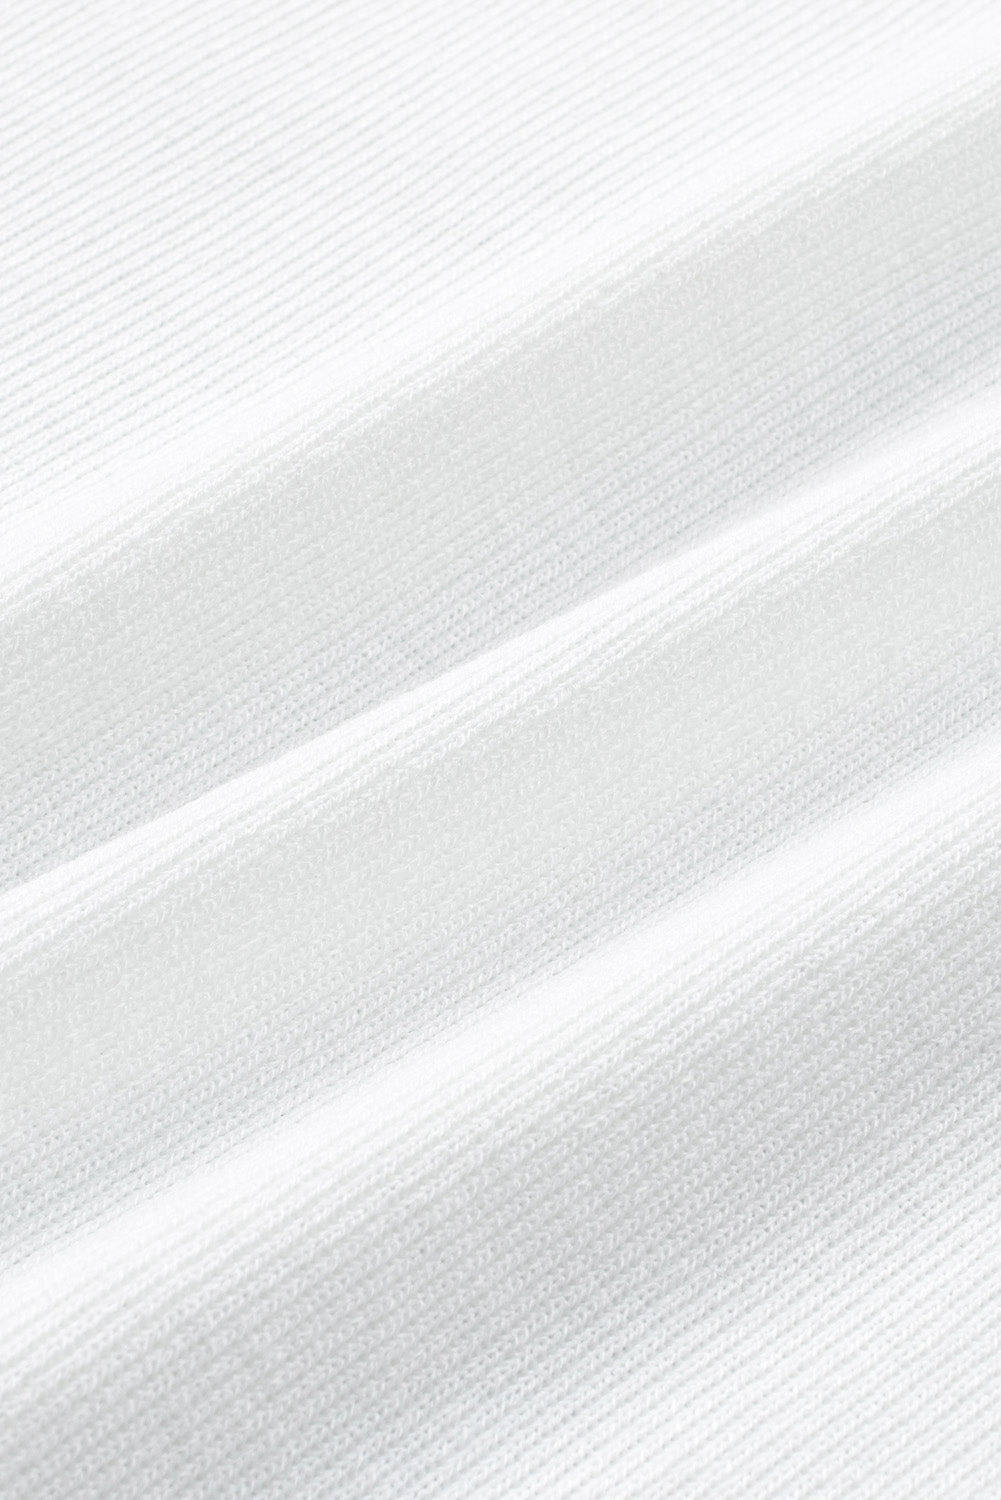 White Ribbed Knit Skinny Square Neck Tank Top Tank Tops JT's Designer Fashion